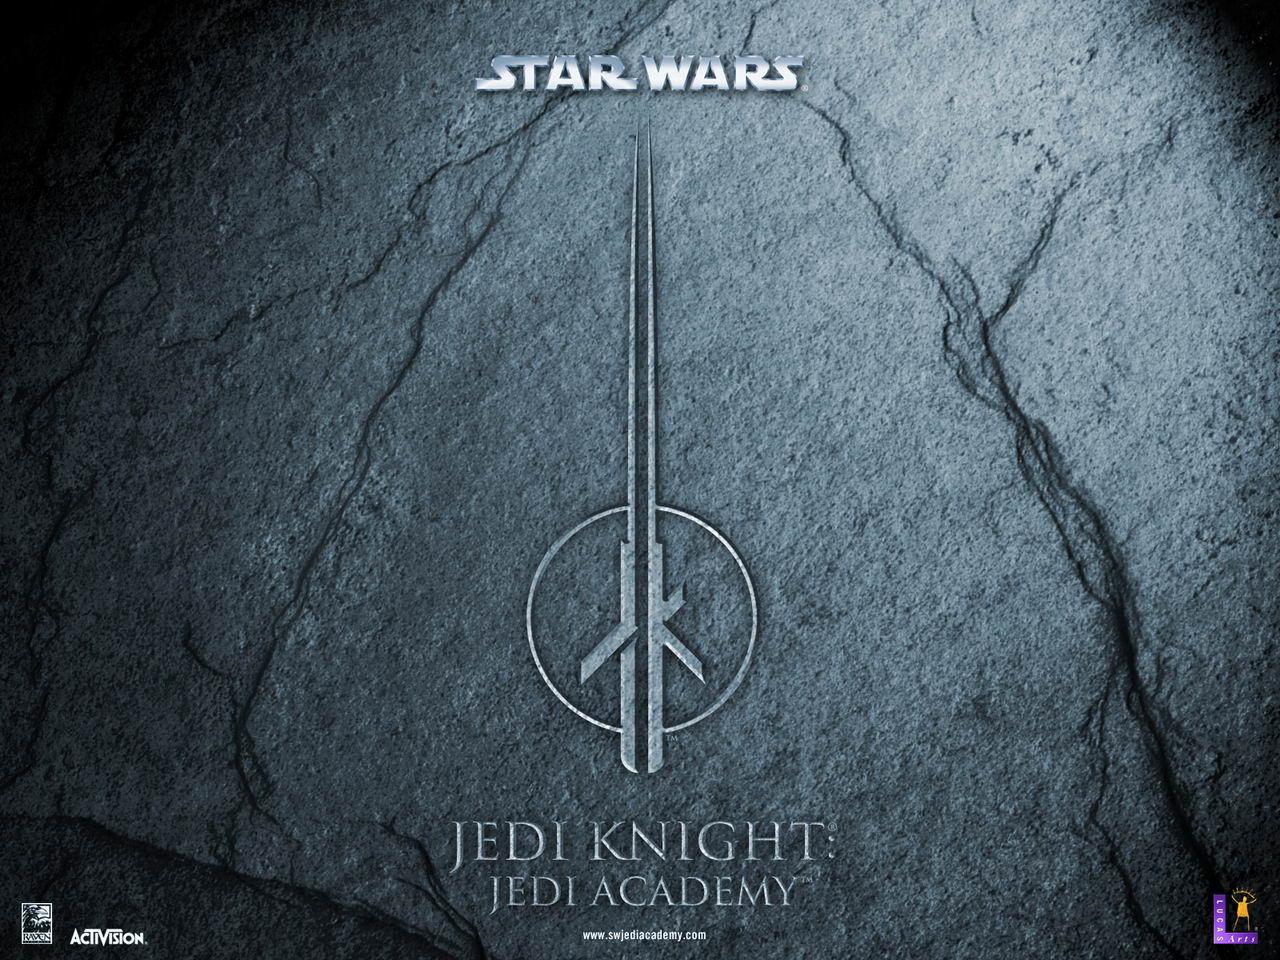 STAR WARS EPISODE 7 Rumor: Will Luke Skywalker Start a Jedi